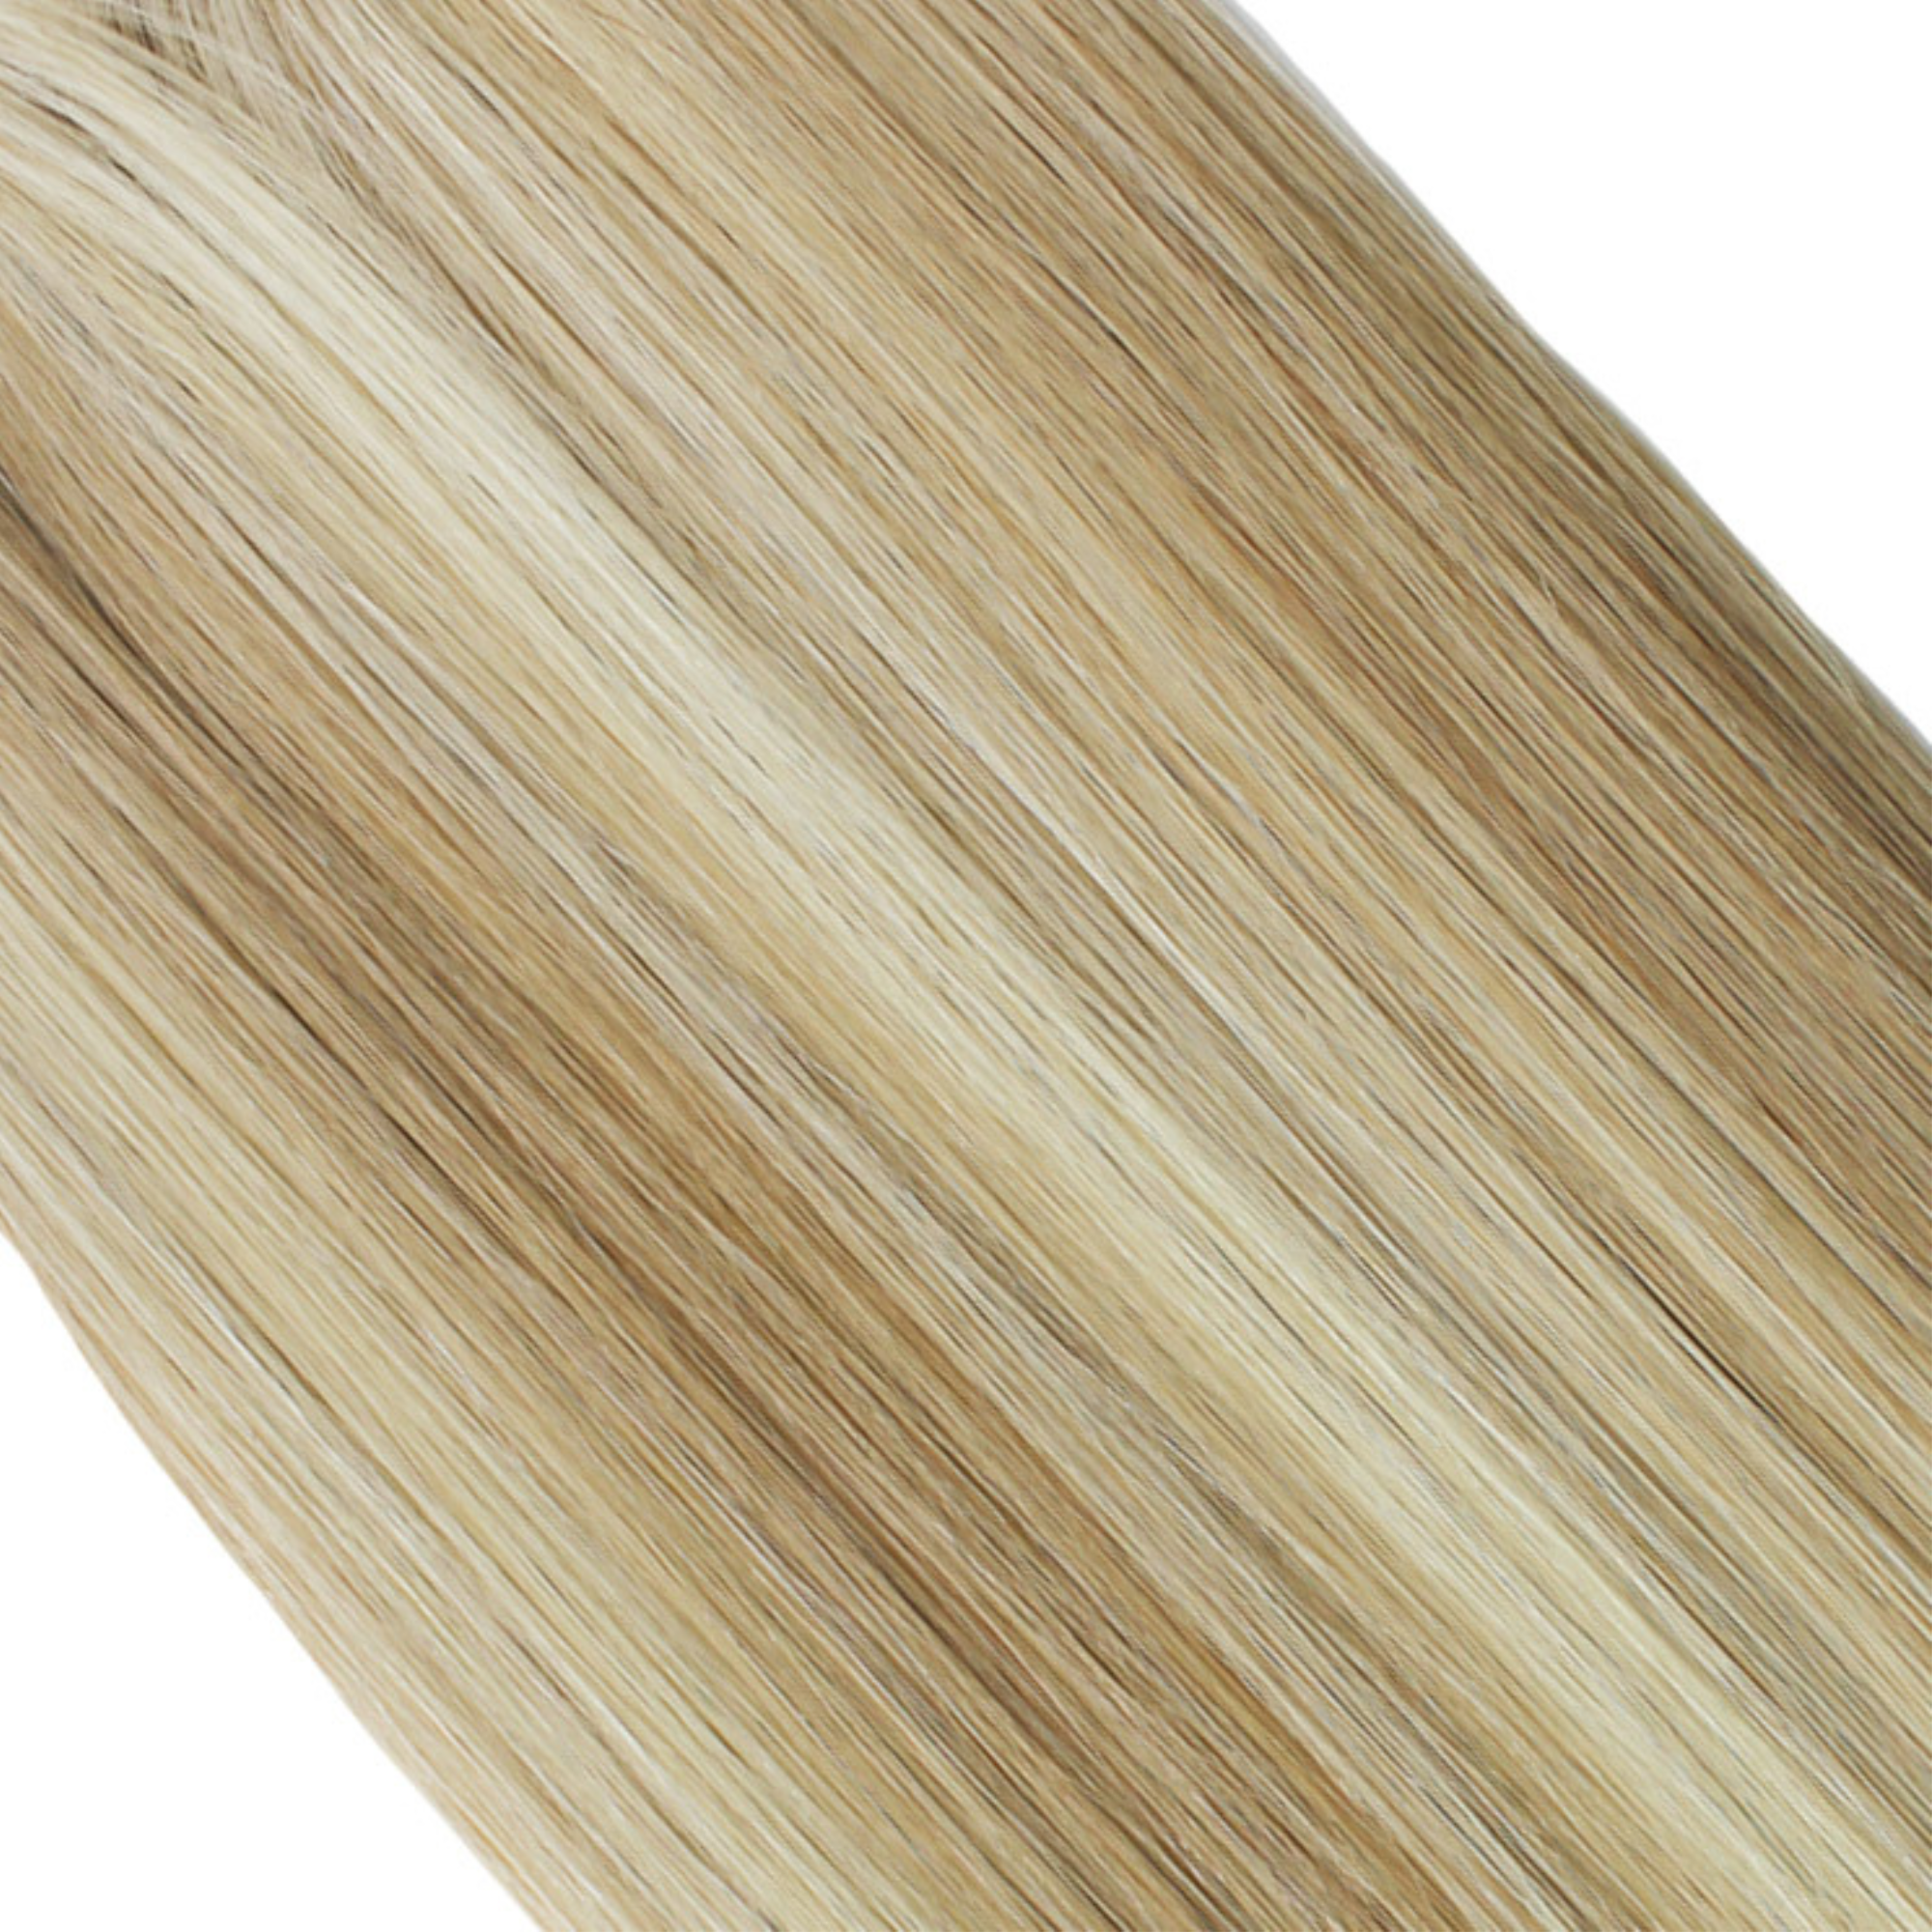 "hair rehab london 14" tape hair extensions shade swatch titled coachella blonde"